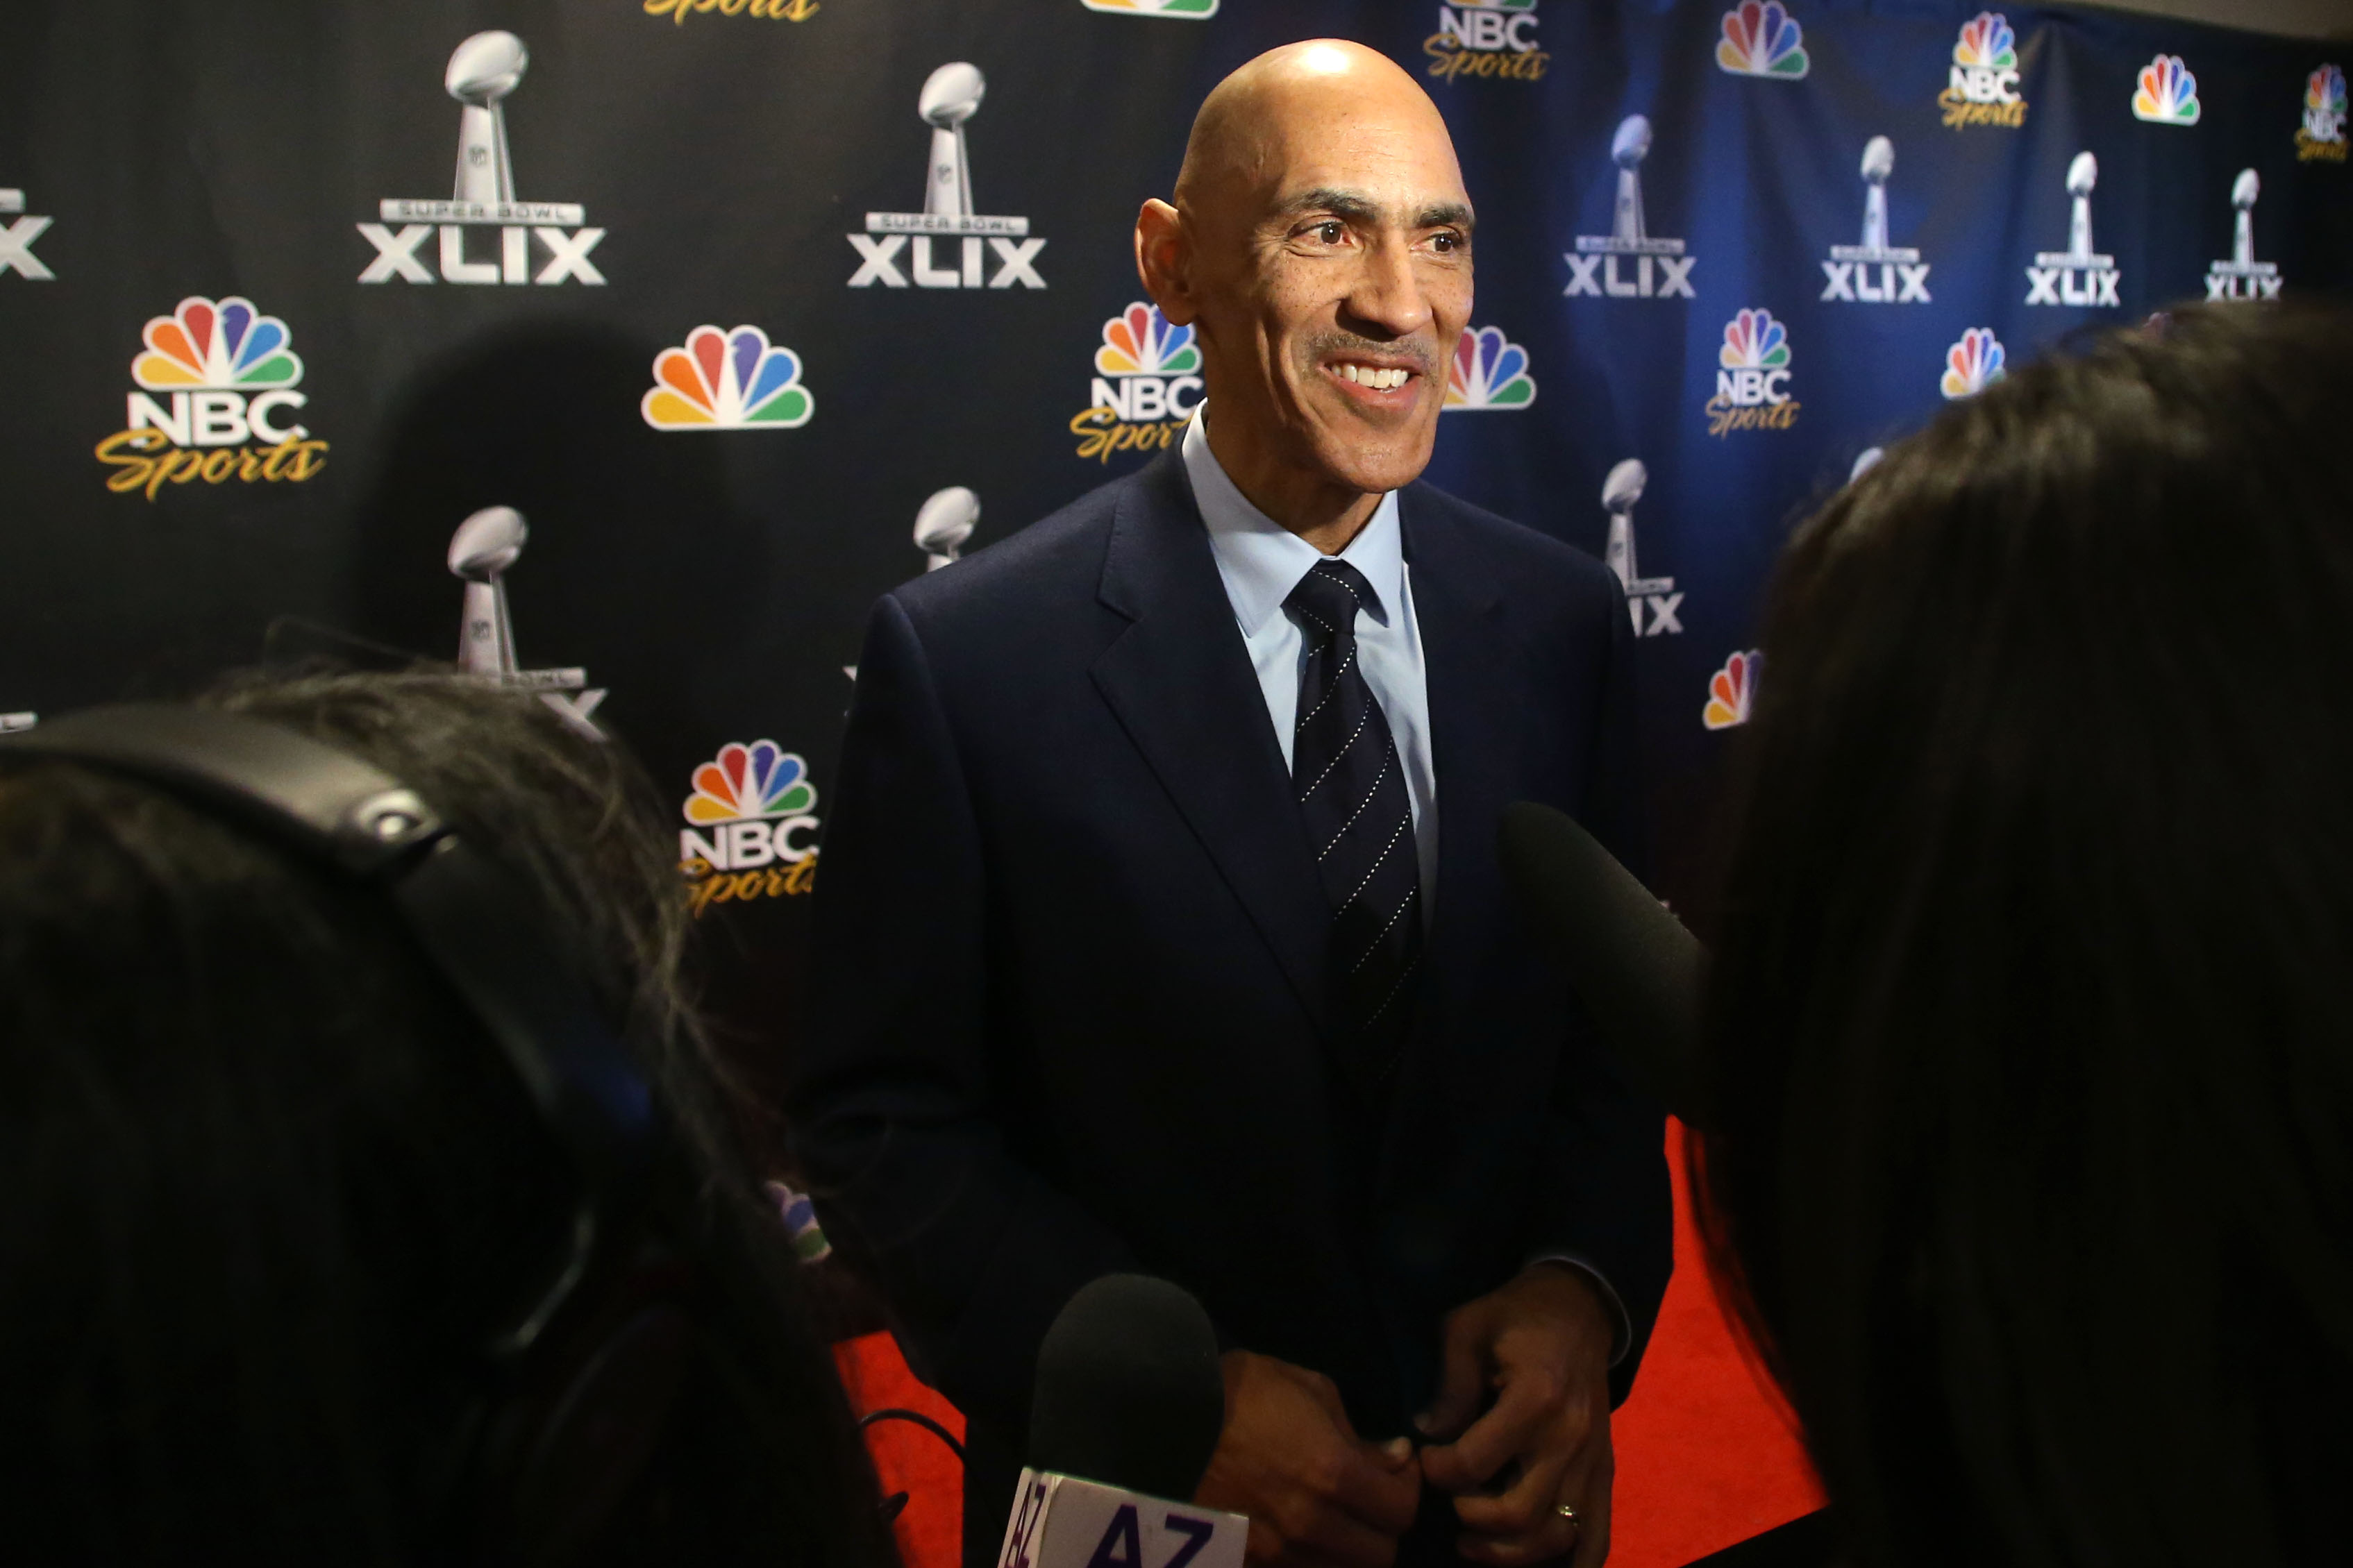 NFL: Super Bowl XLIX-NBC Sports Group Press Conference